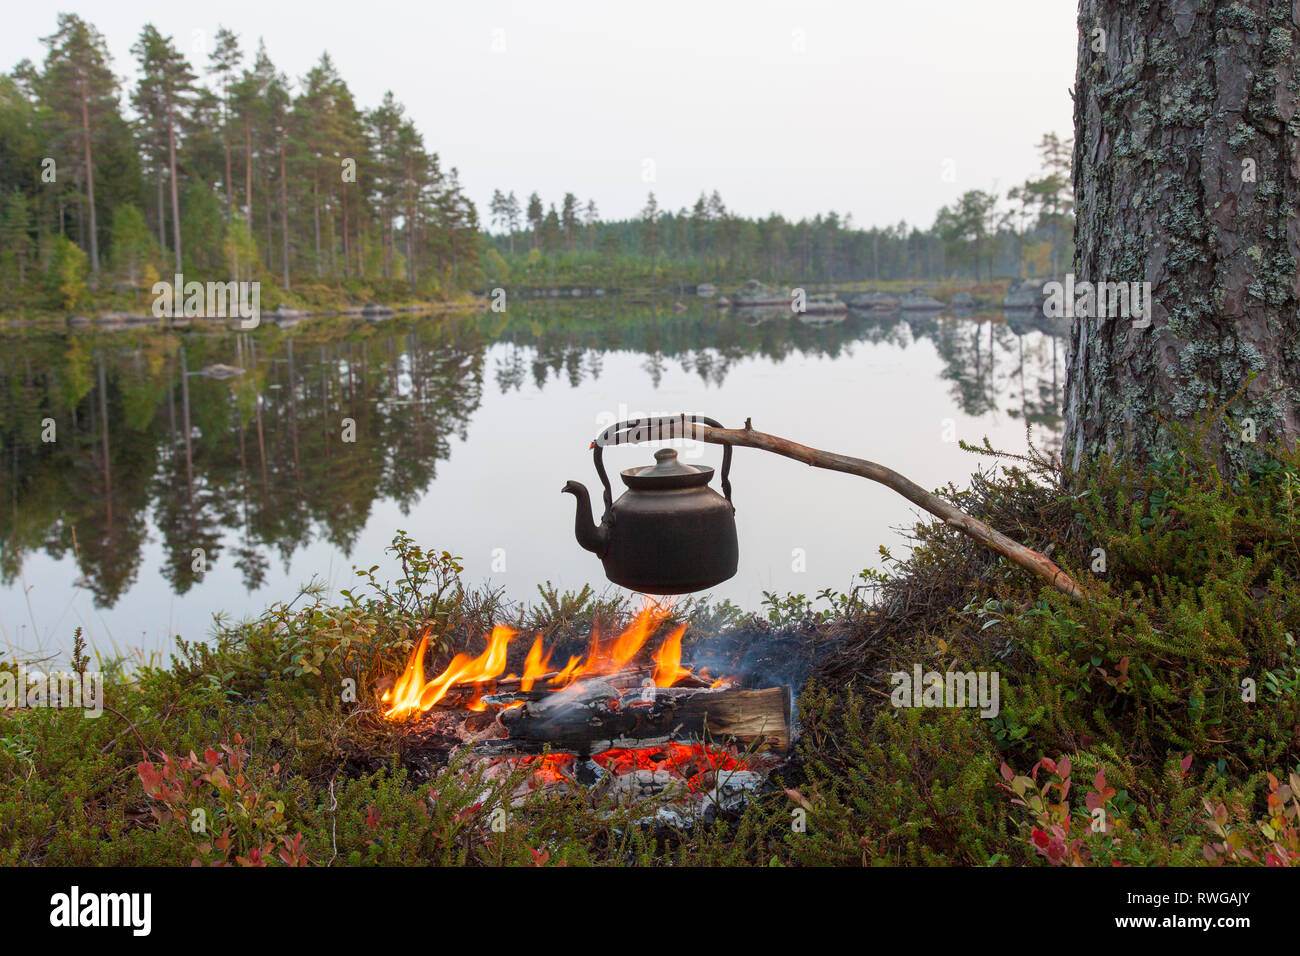 Tin kettle on the camp fire. Vaermland, Sweden Stock Photo